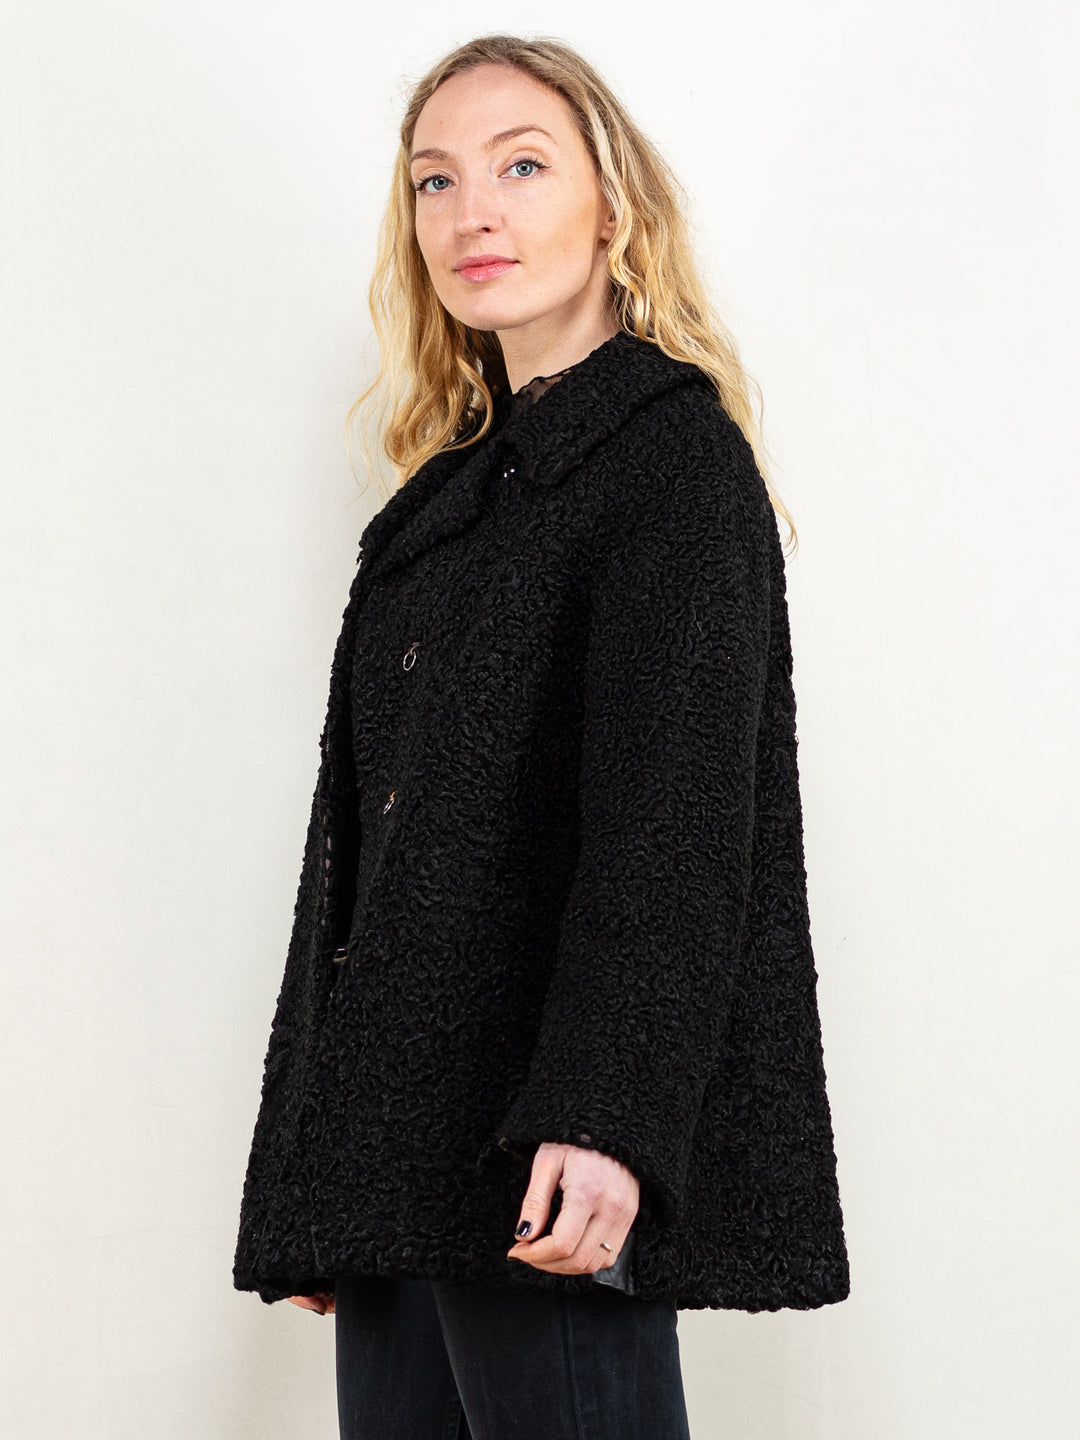 Black Karakul Coat women vintage 70s lamb fur winter jacket outerwear flute sleeve retro 70s winter coat vintage clothing size medium